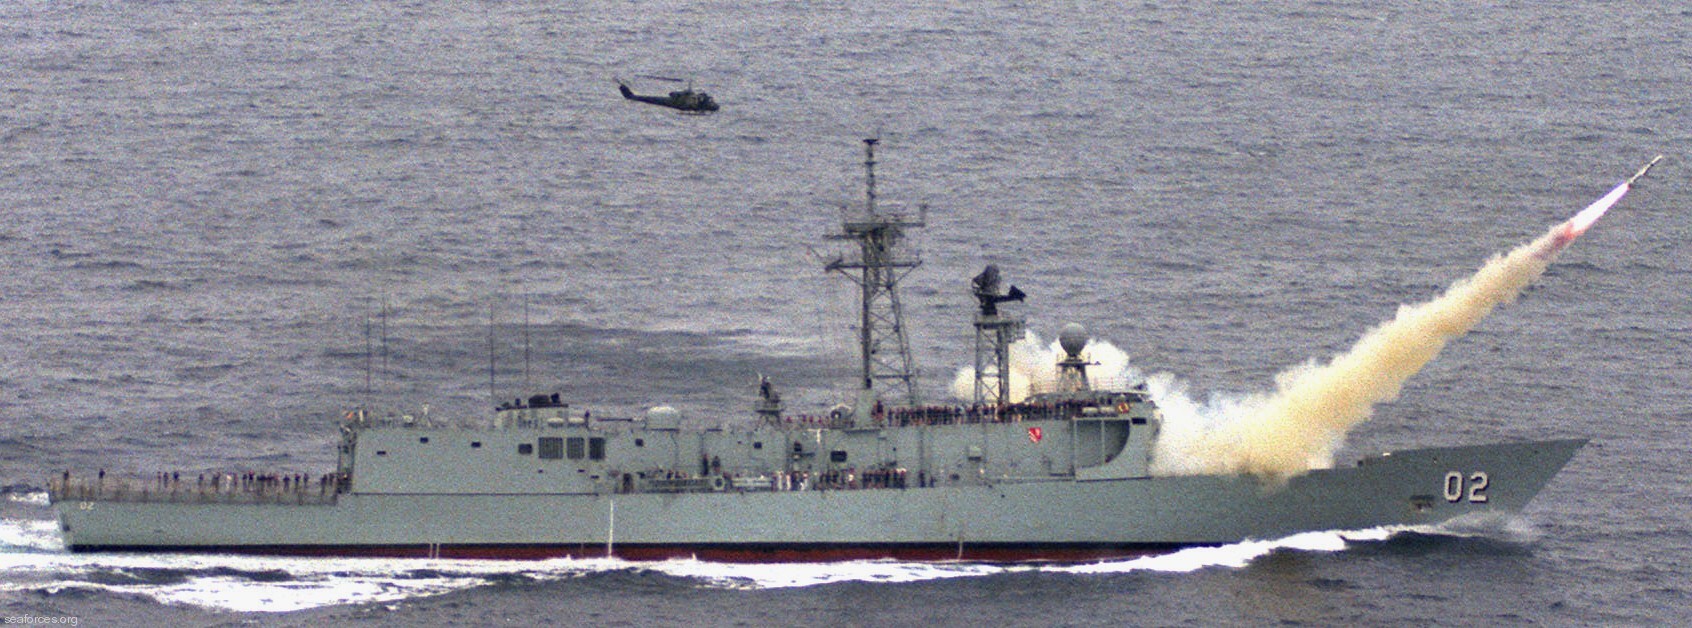 ffg-02 hmas canberra adelaide class frigate royal australian navy 1981 rgm-84 harpoon mk-13 missile launcher point mugu